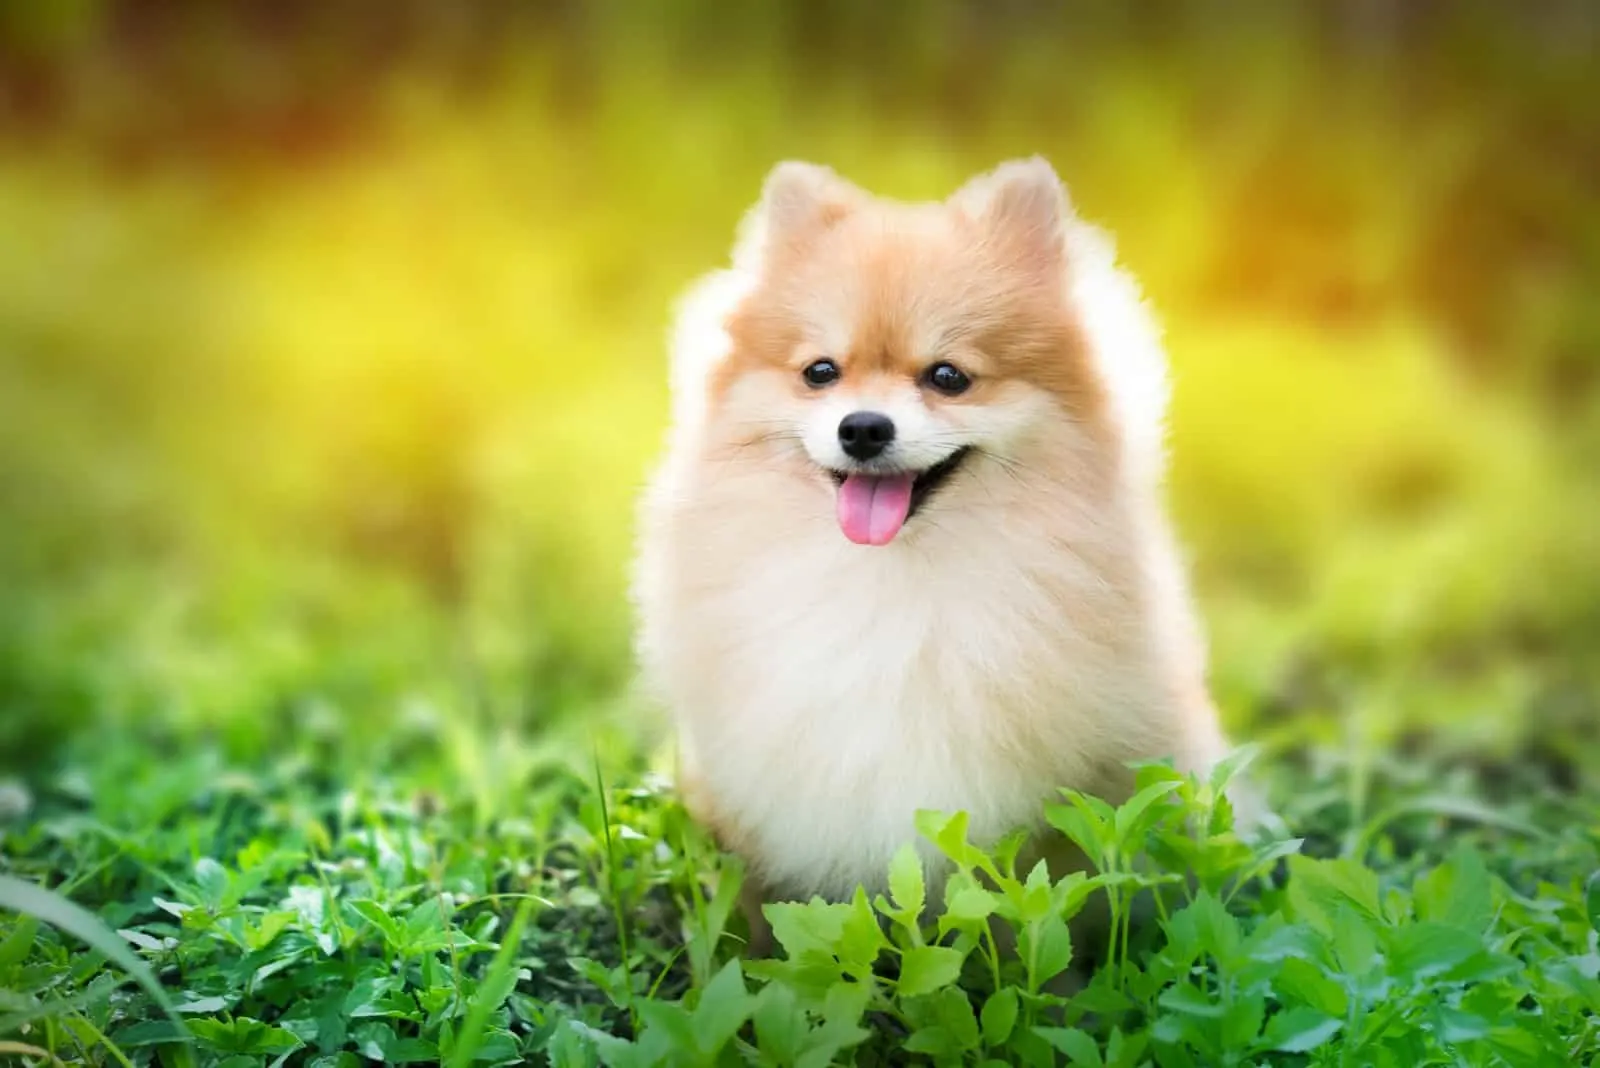 Pomeranian sitting on grass